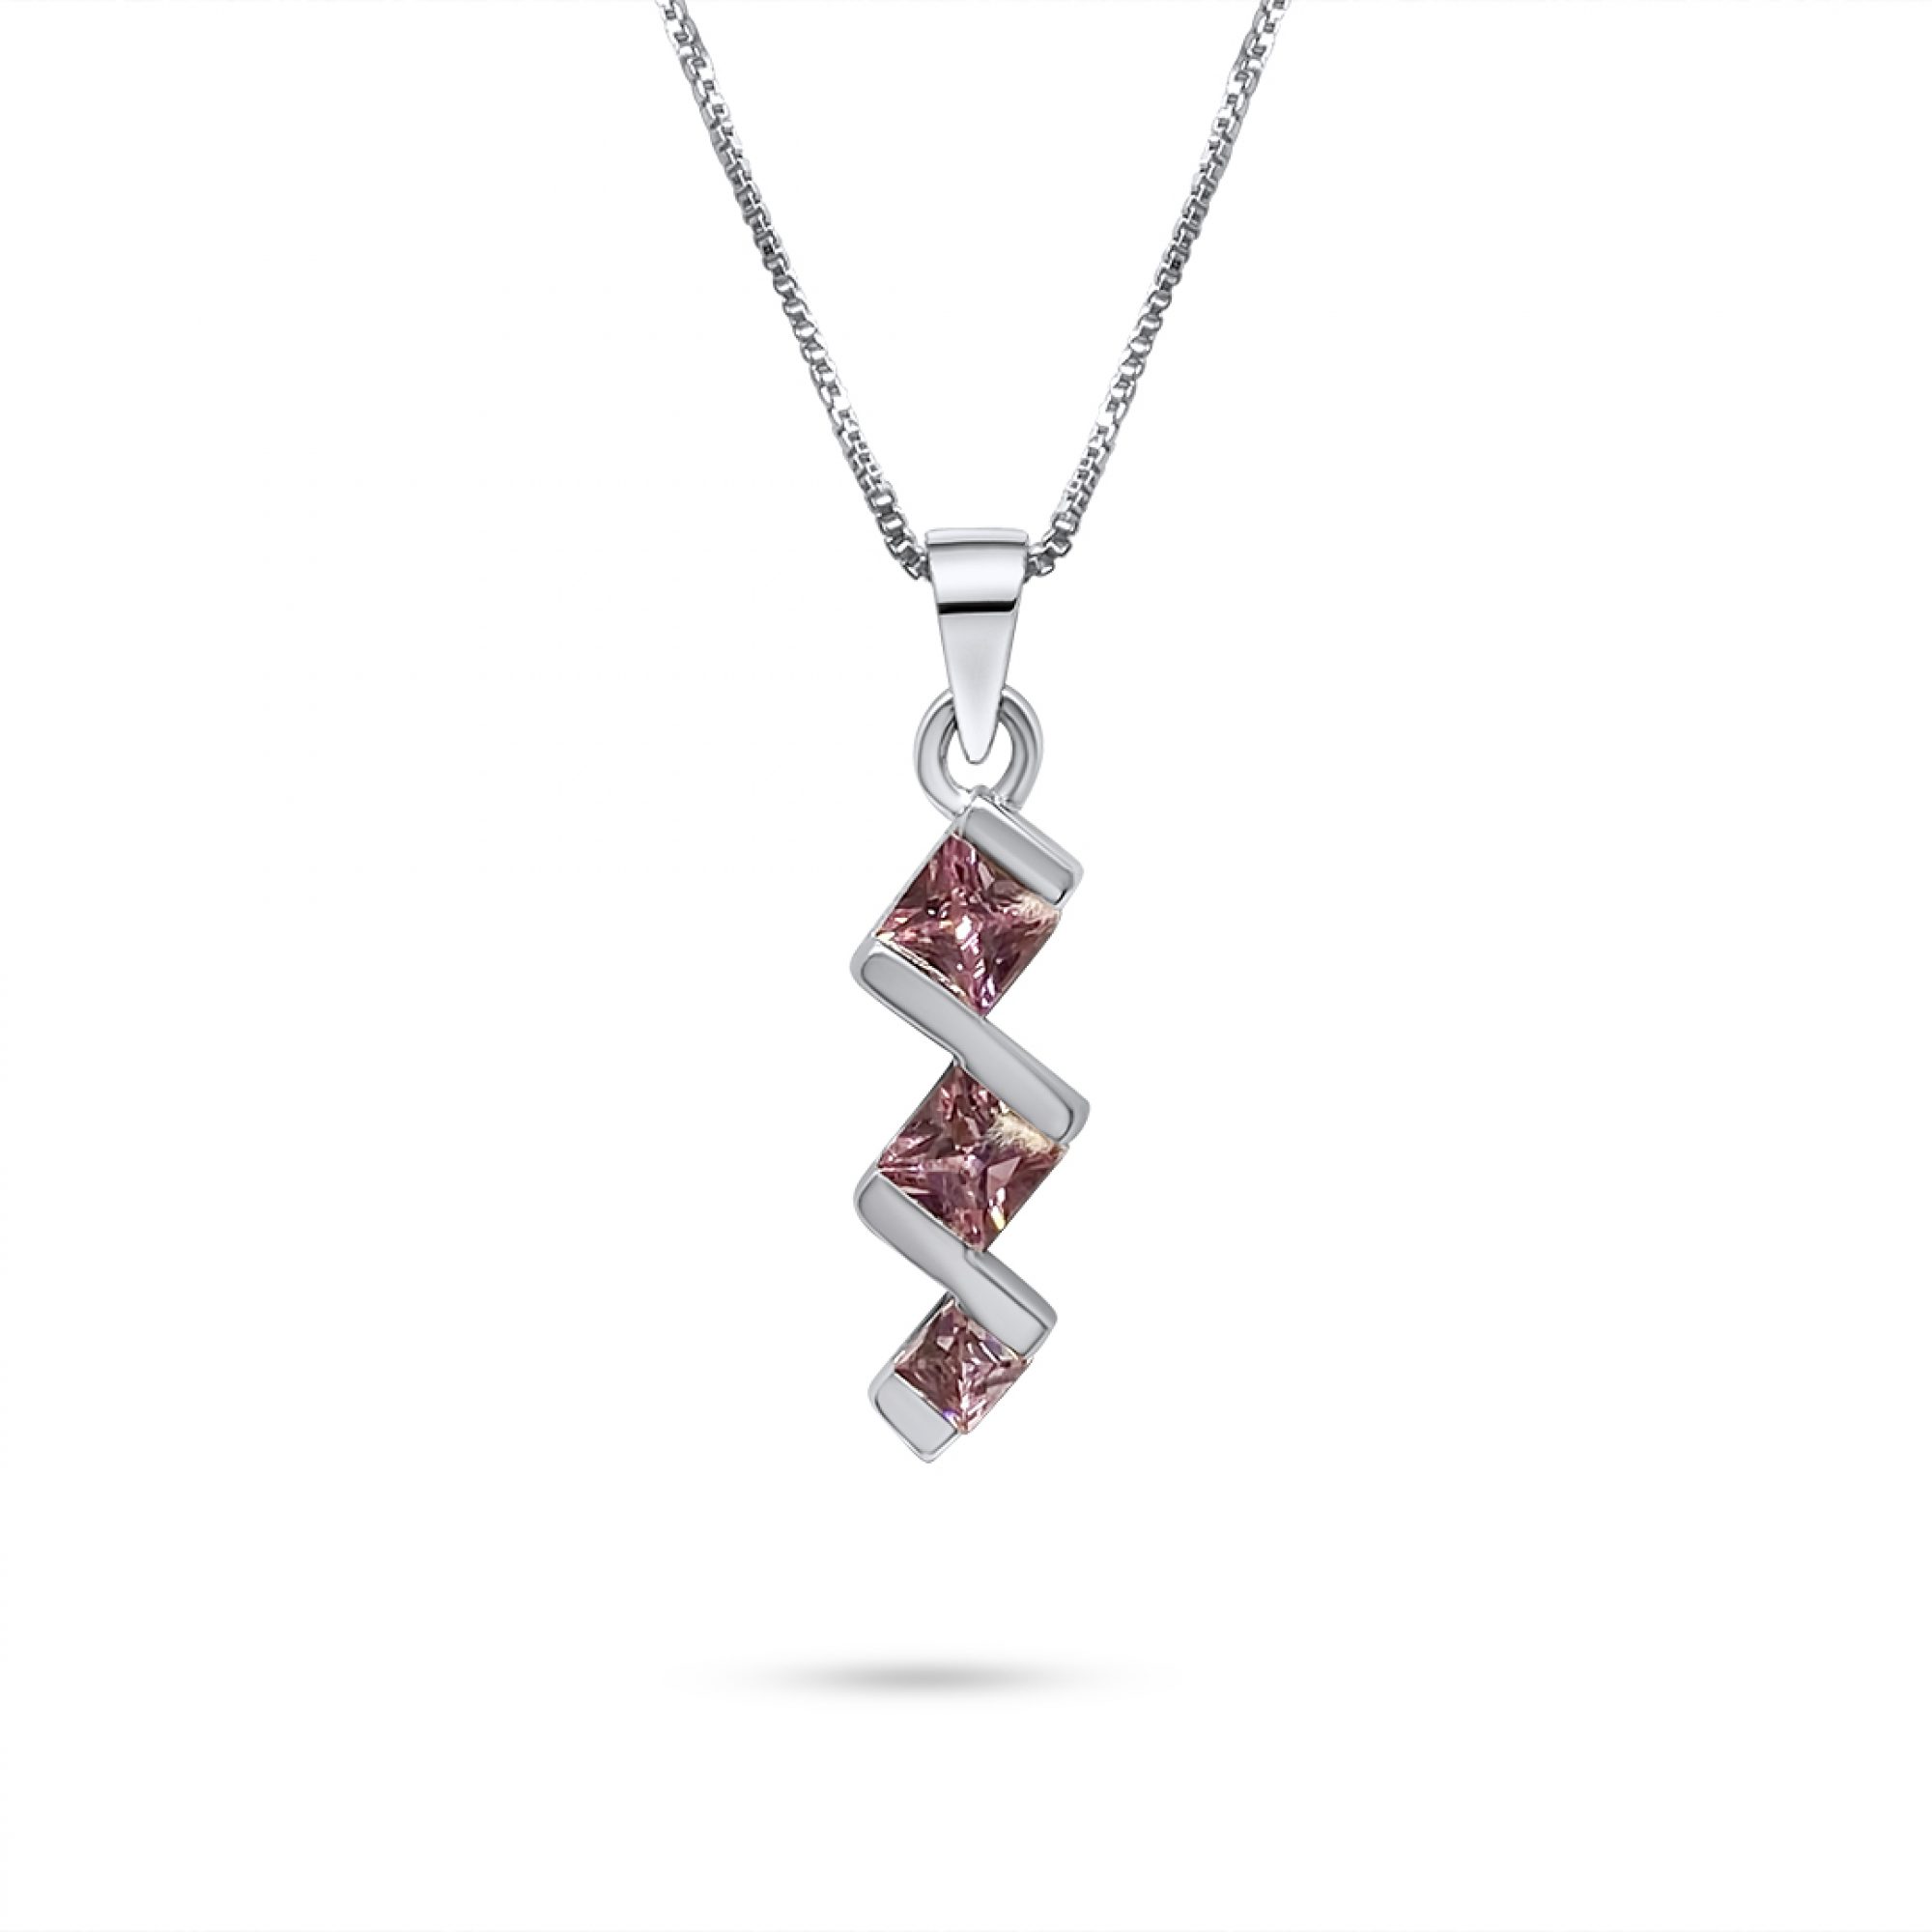 Necklace with pink quartz stones